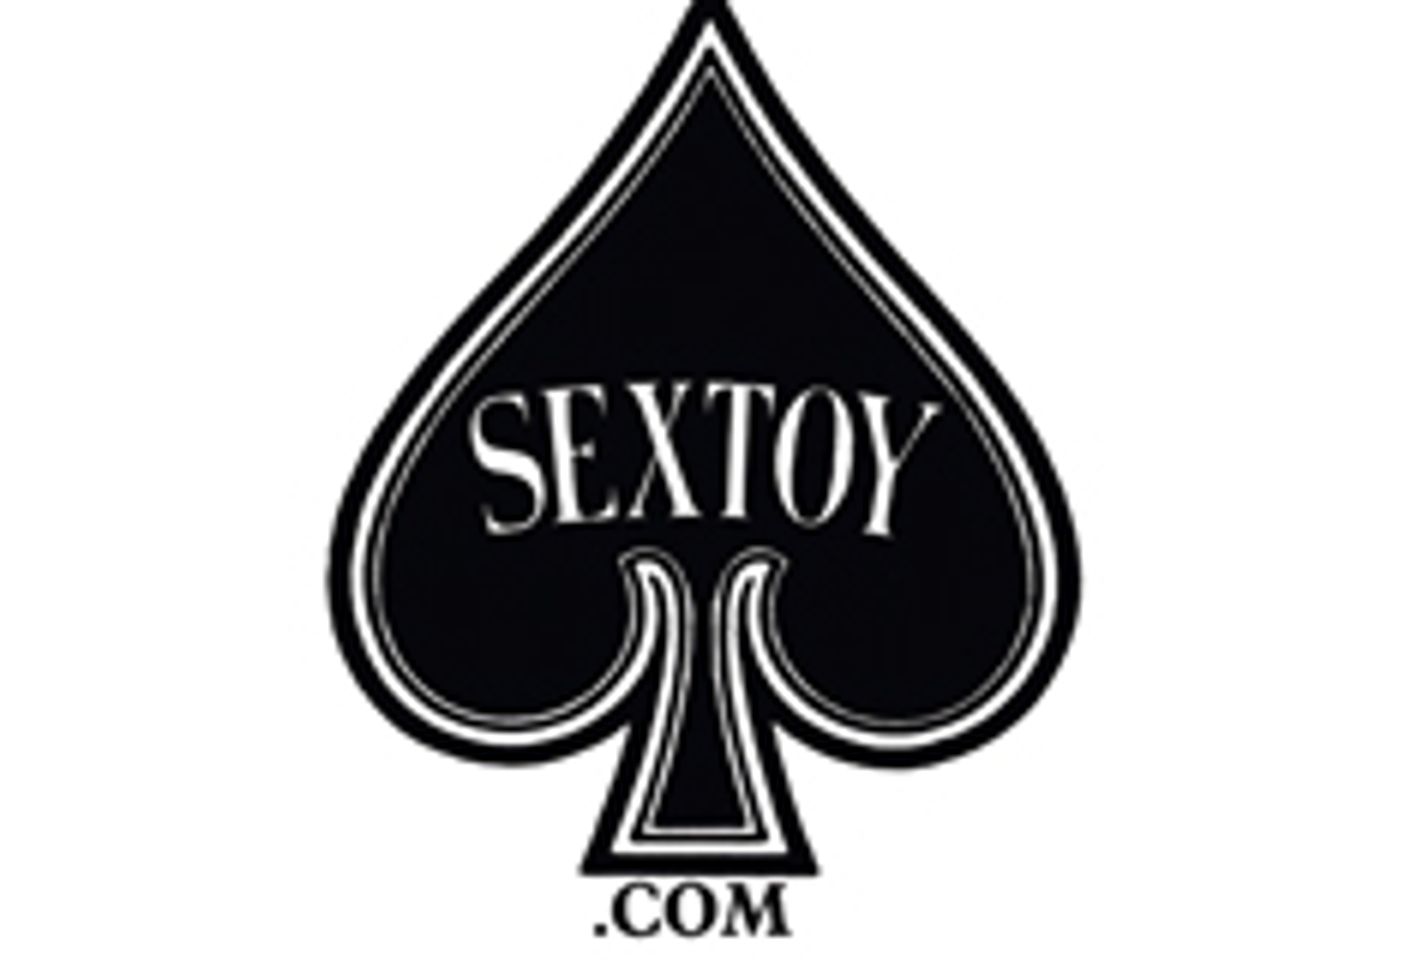 Sextoy.com Upgrades Look